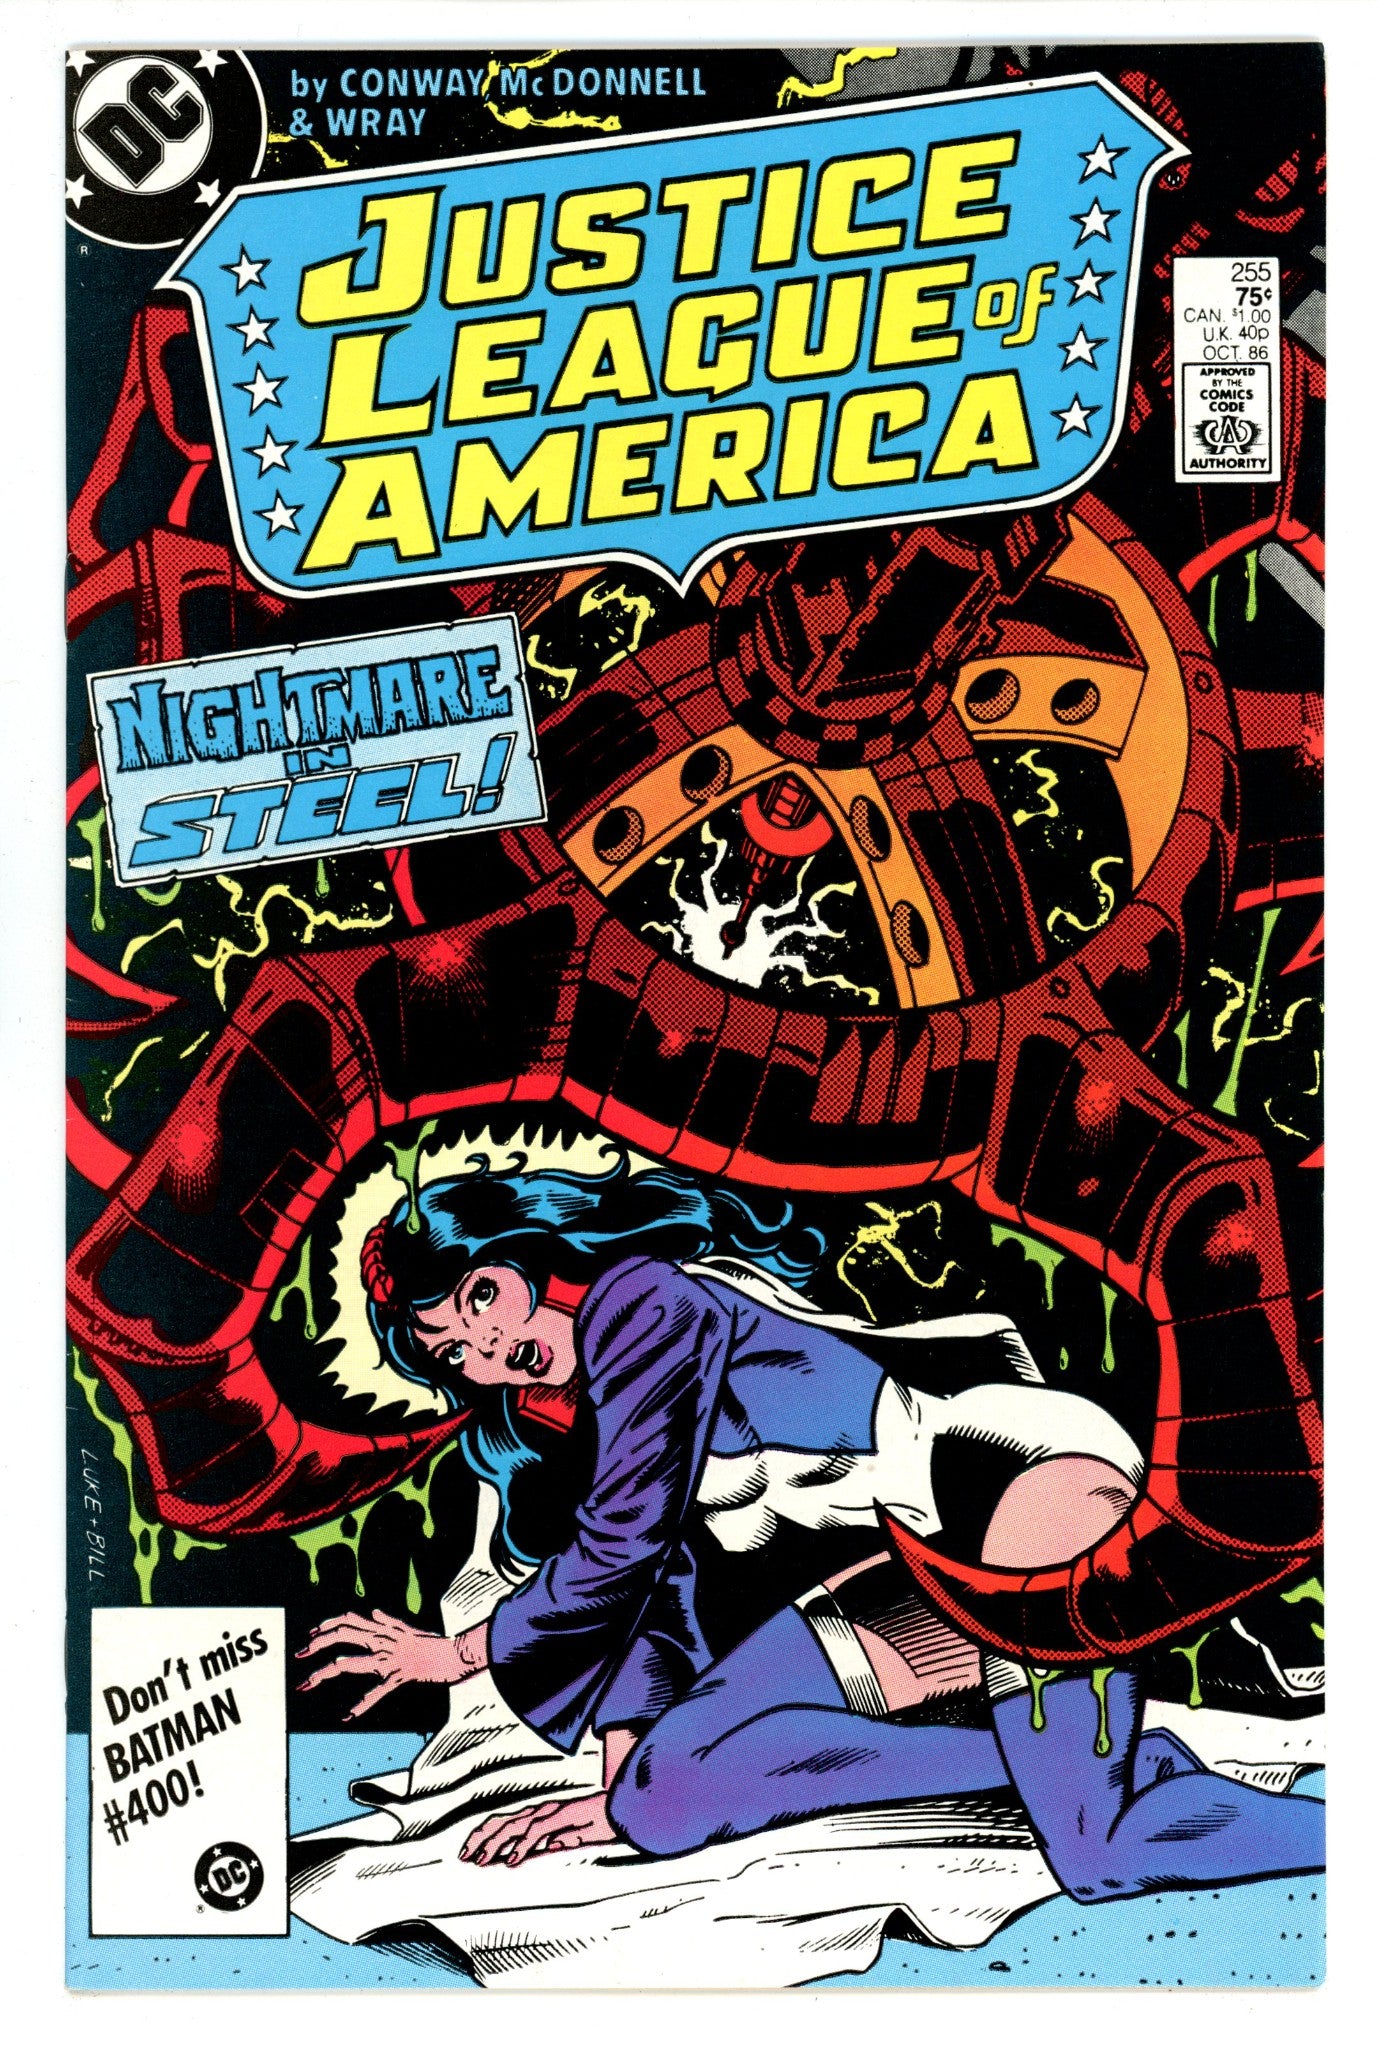 Justice League of America Vol 1 255 High Grade (1986) 